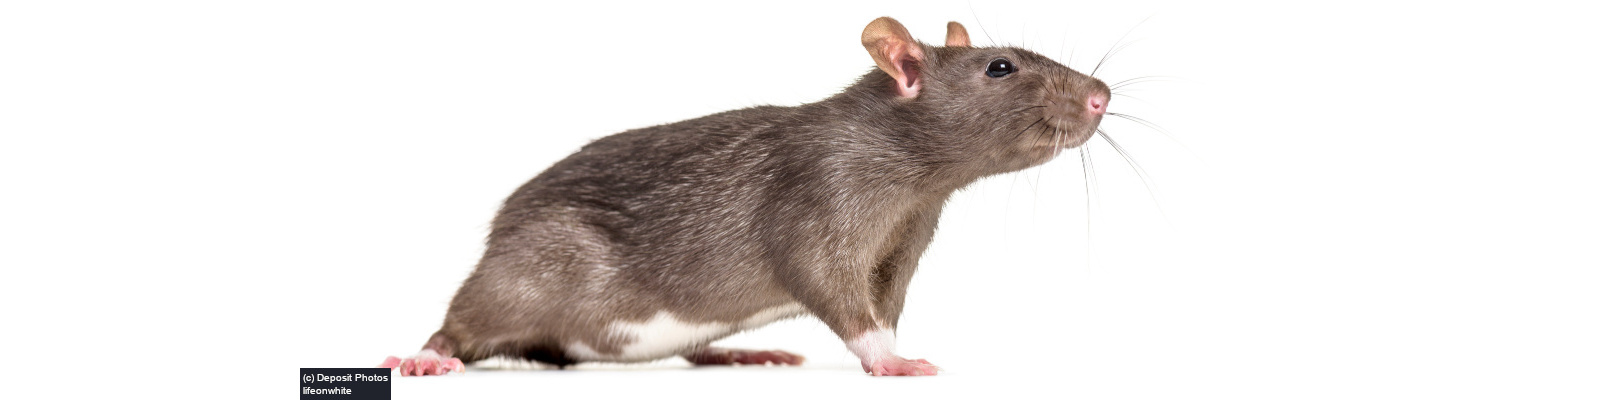 Rat control services